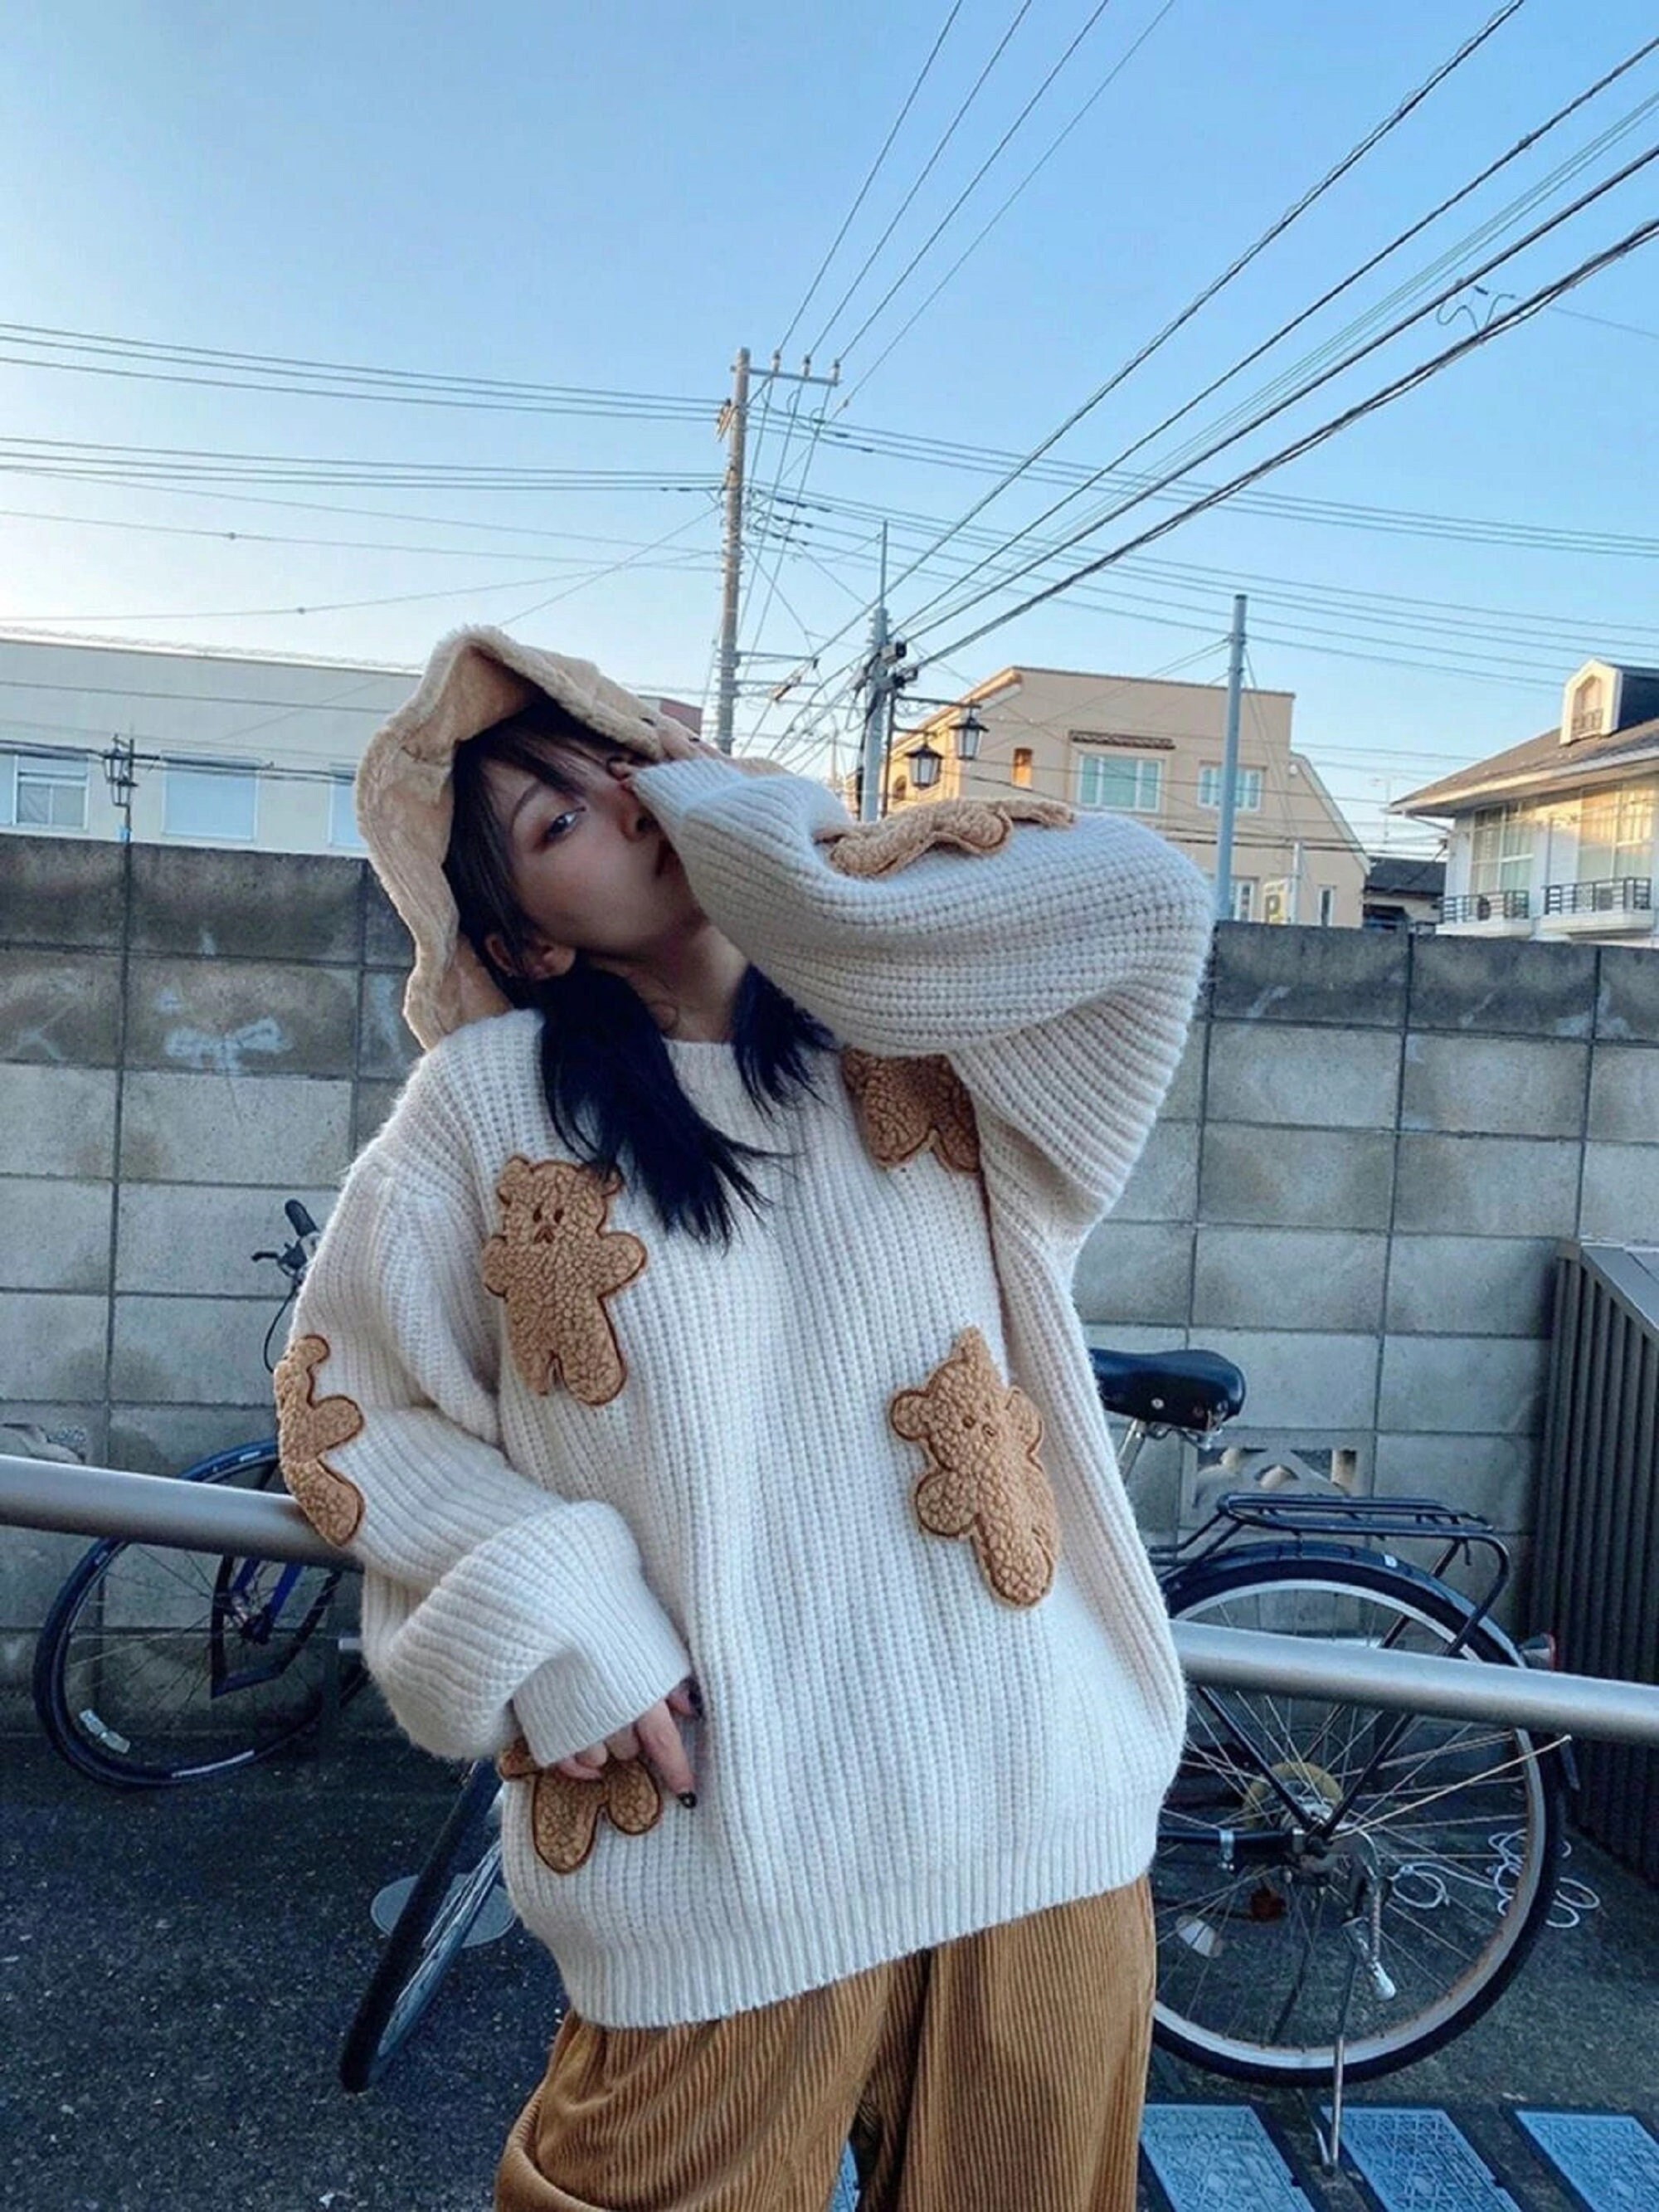 Cute Bear Hot Drink Cup 370ml - Kawaii Fashion Shop  Cute Asian Japanese  Harajuku Cute Kawaii Fashion Clothing